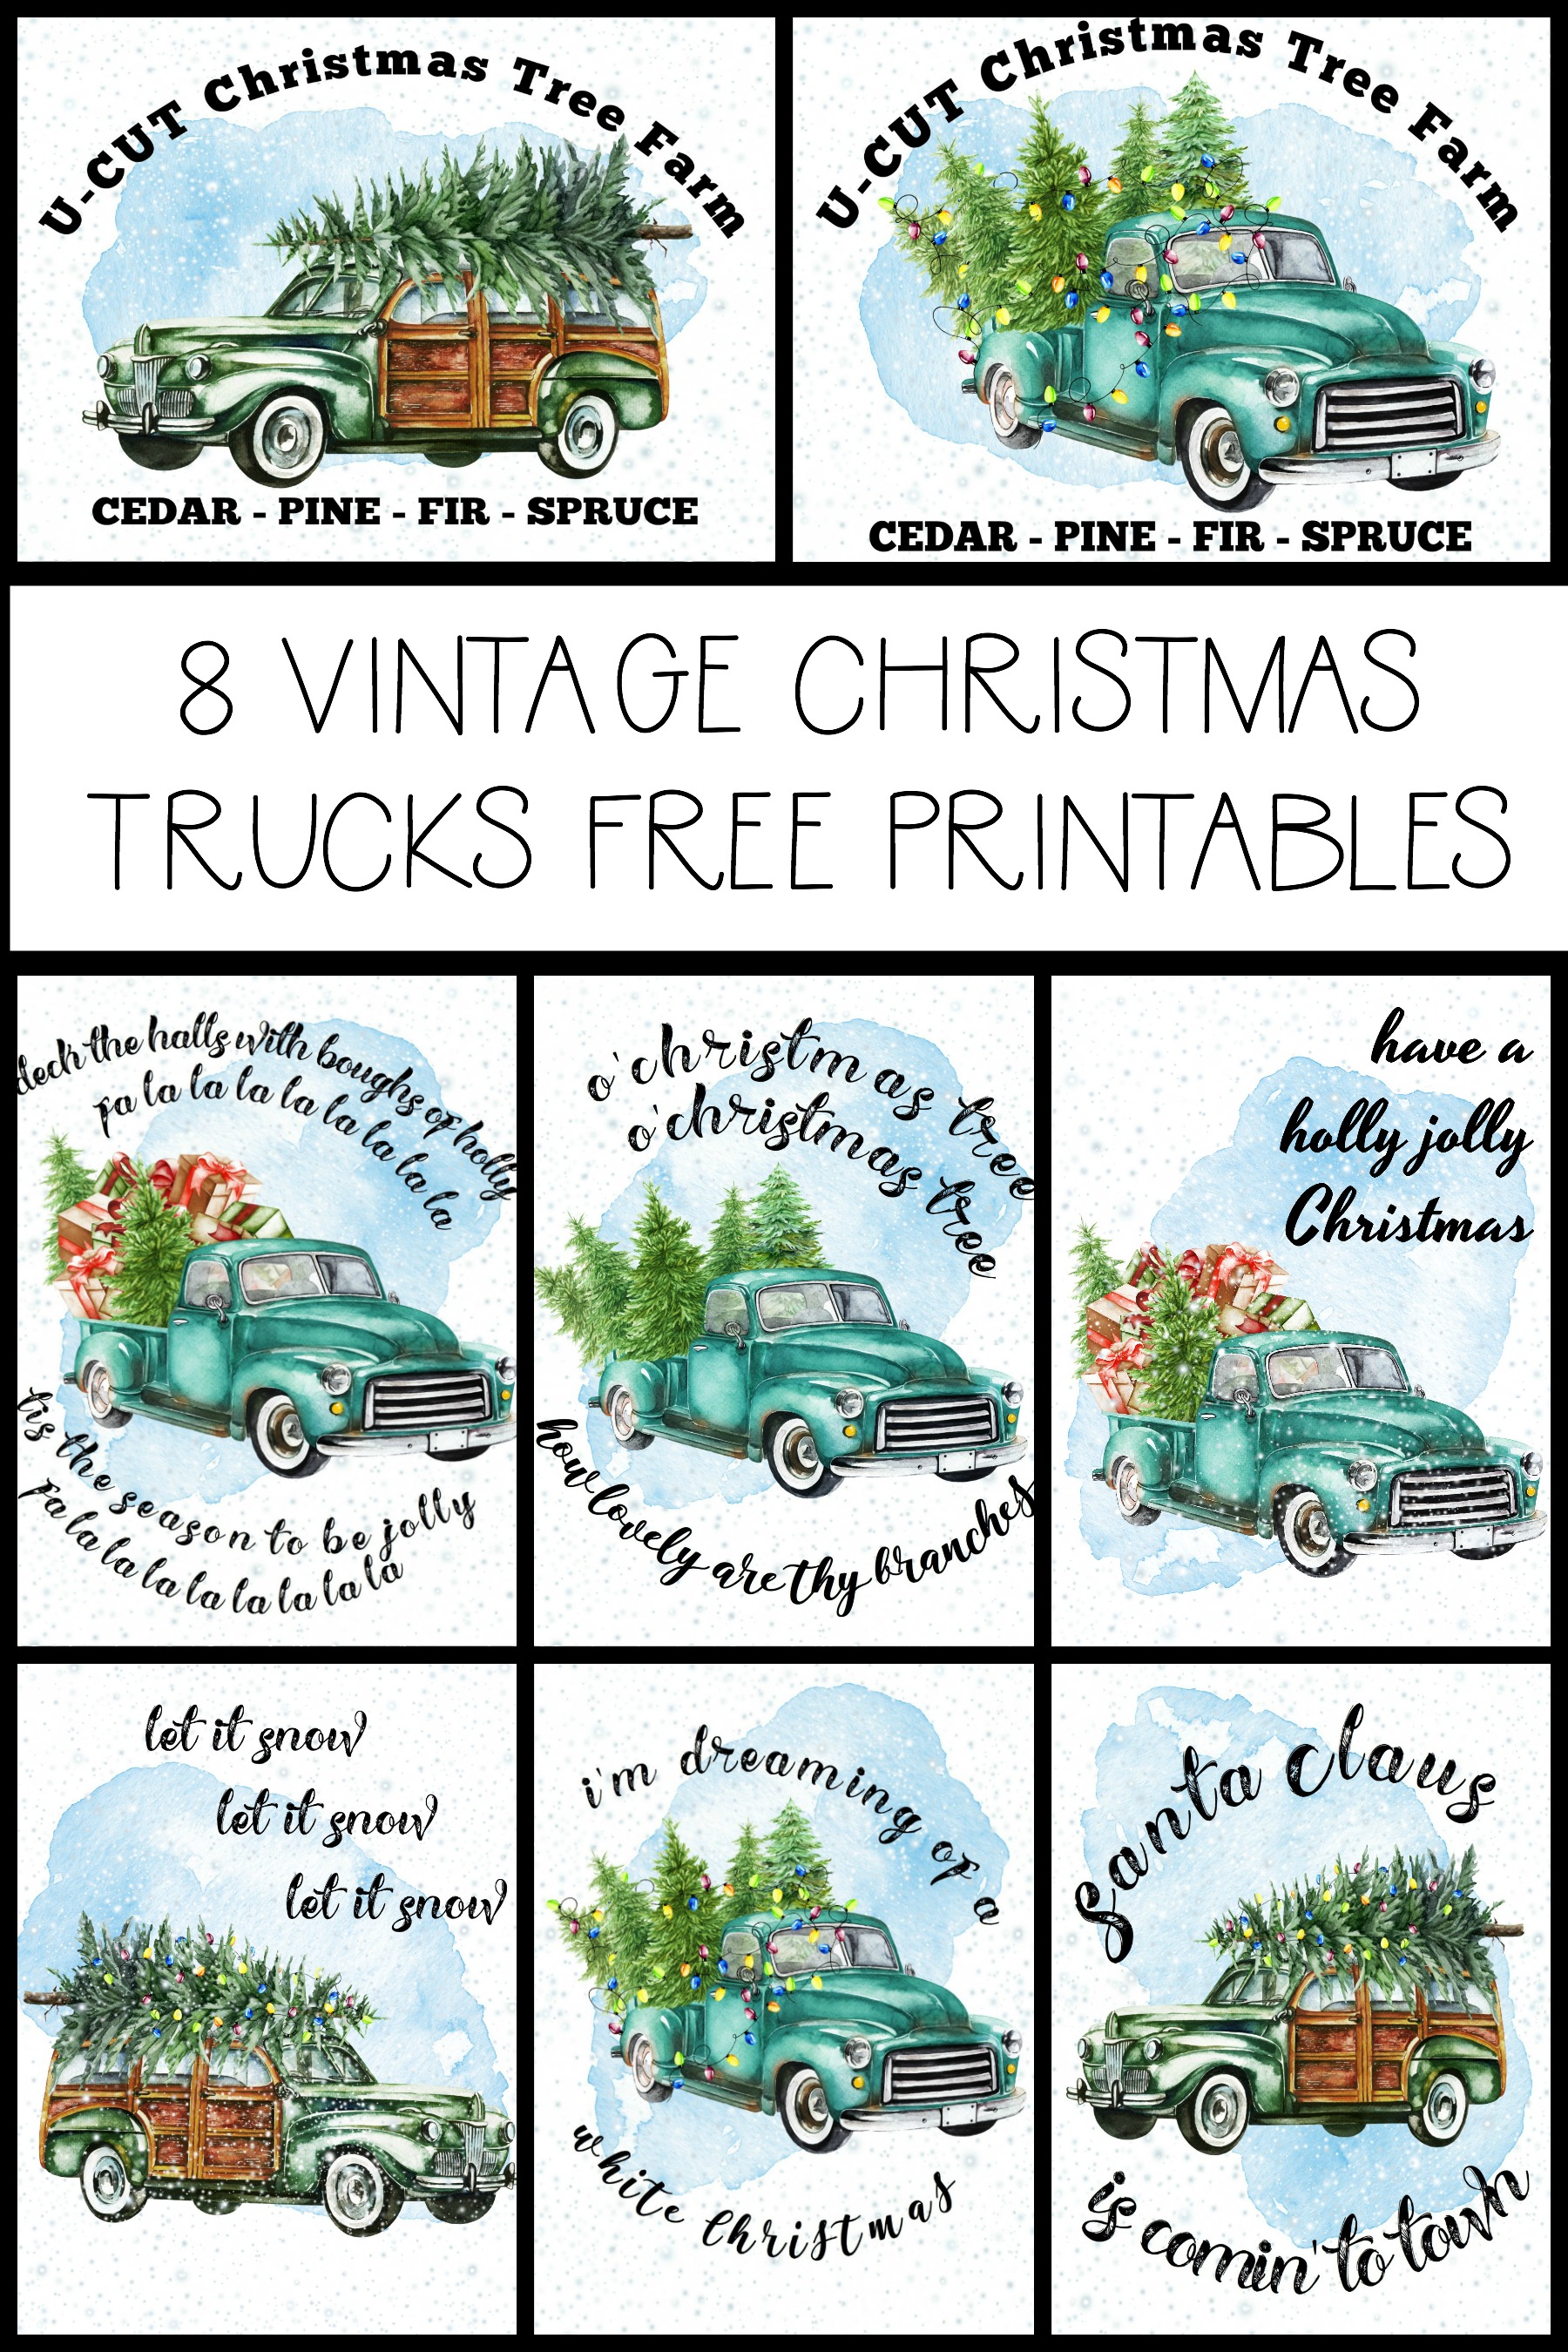 8 vintage Christmas Trucks Free Printables poster.